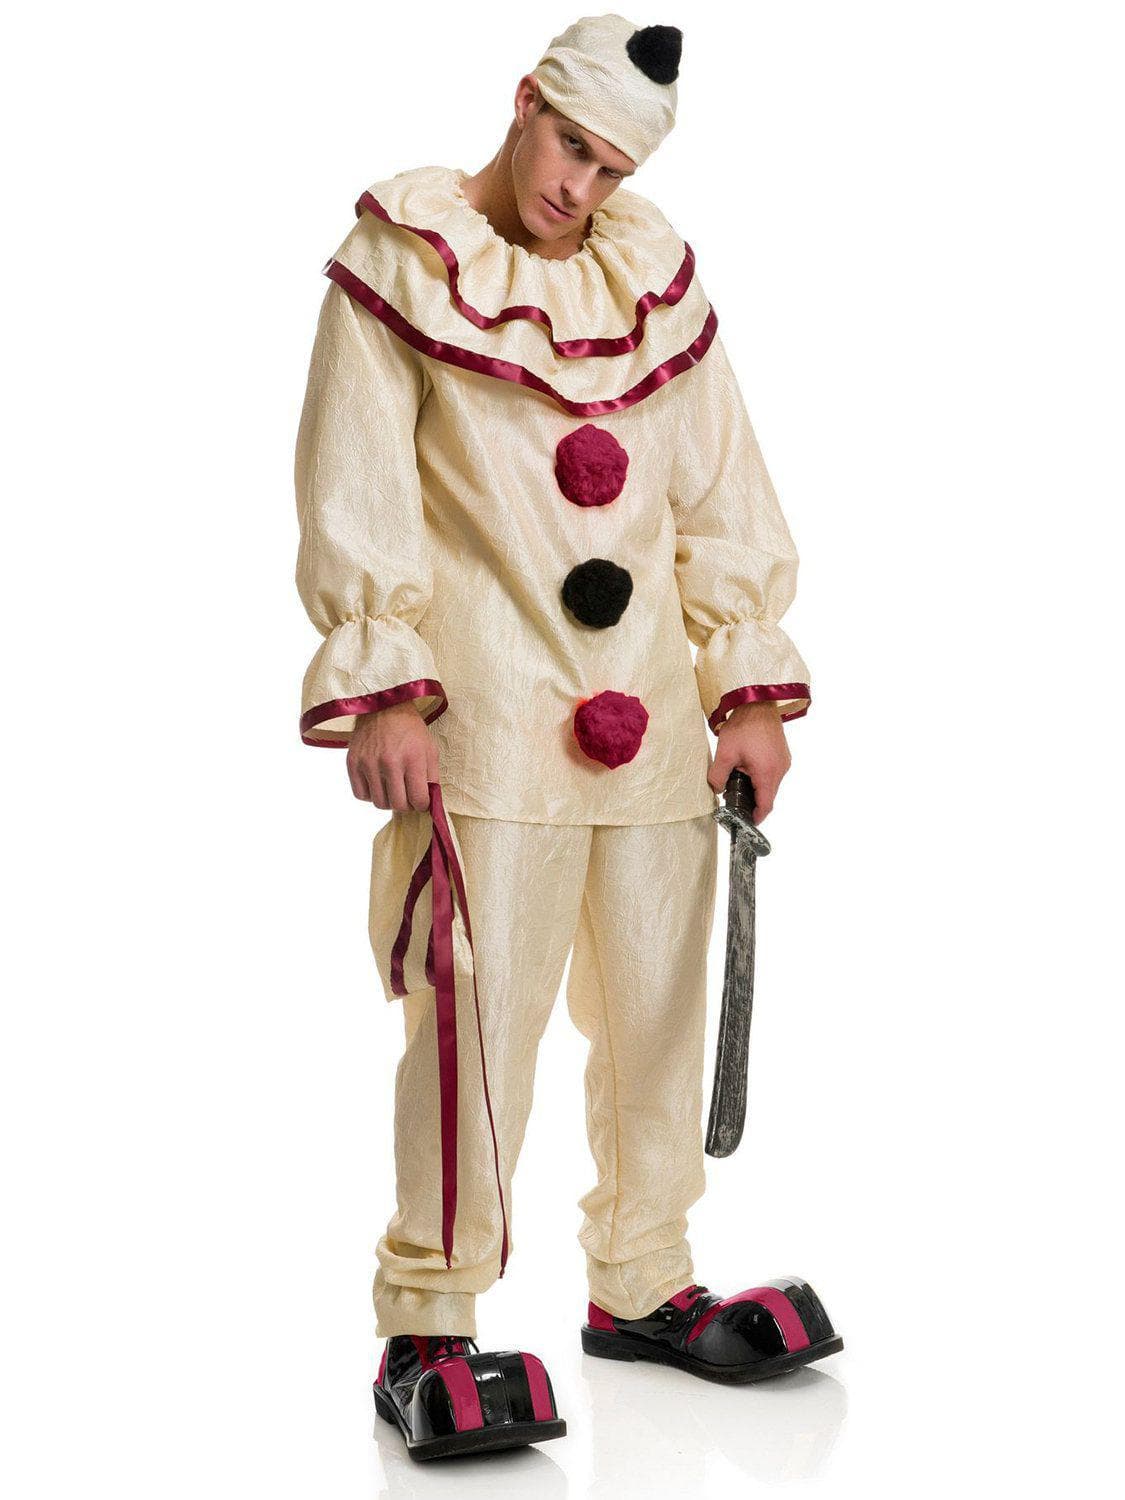 Adult Horror Clown Costume - costumes.com